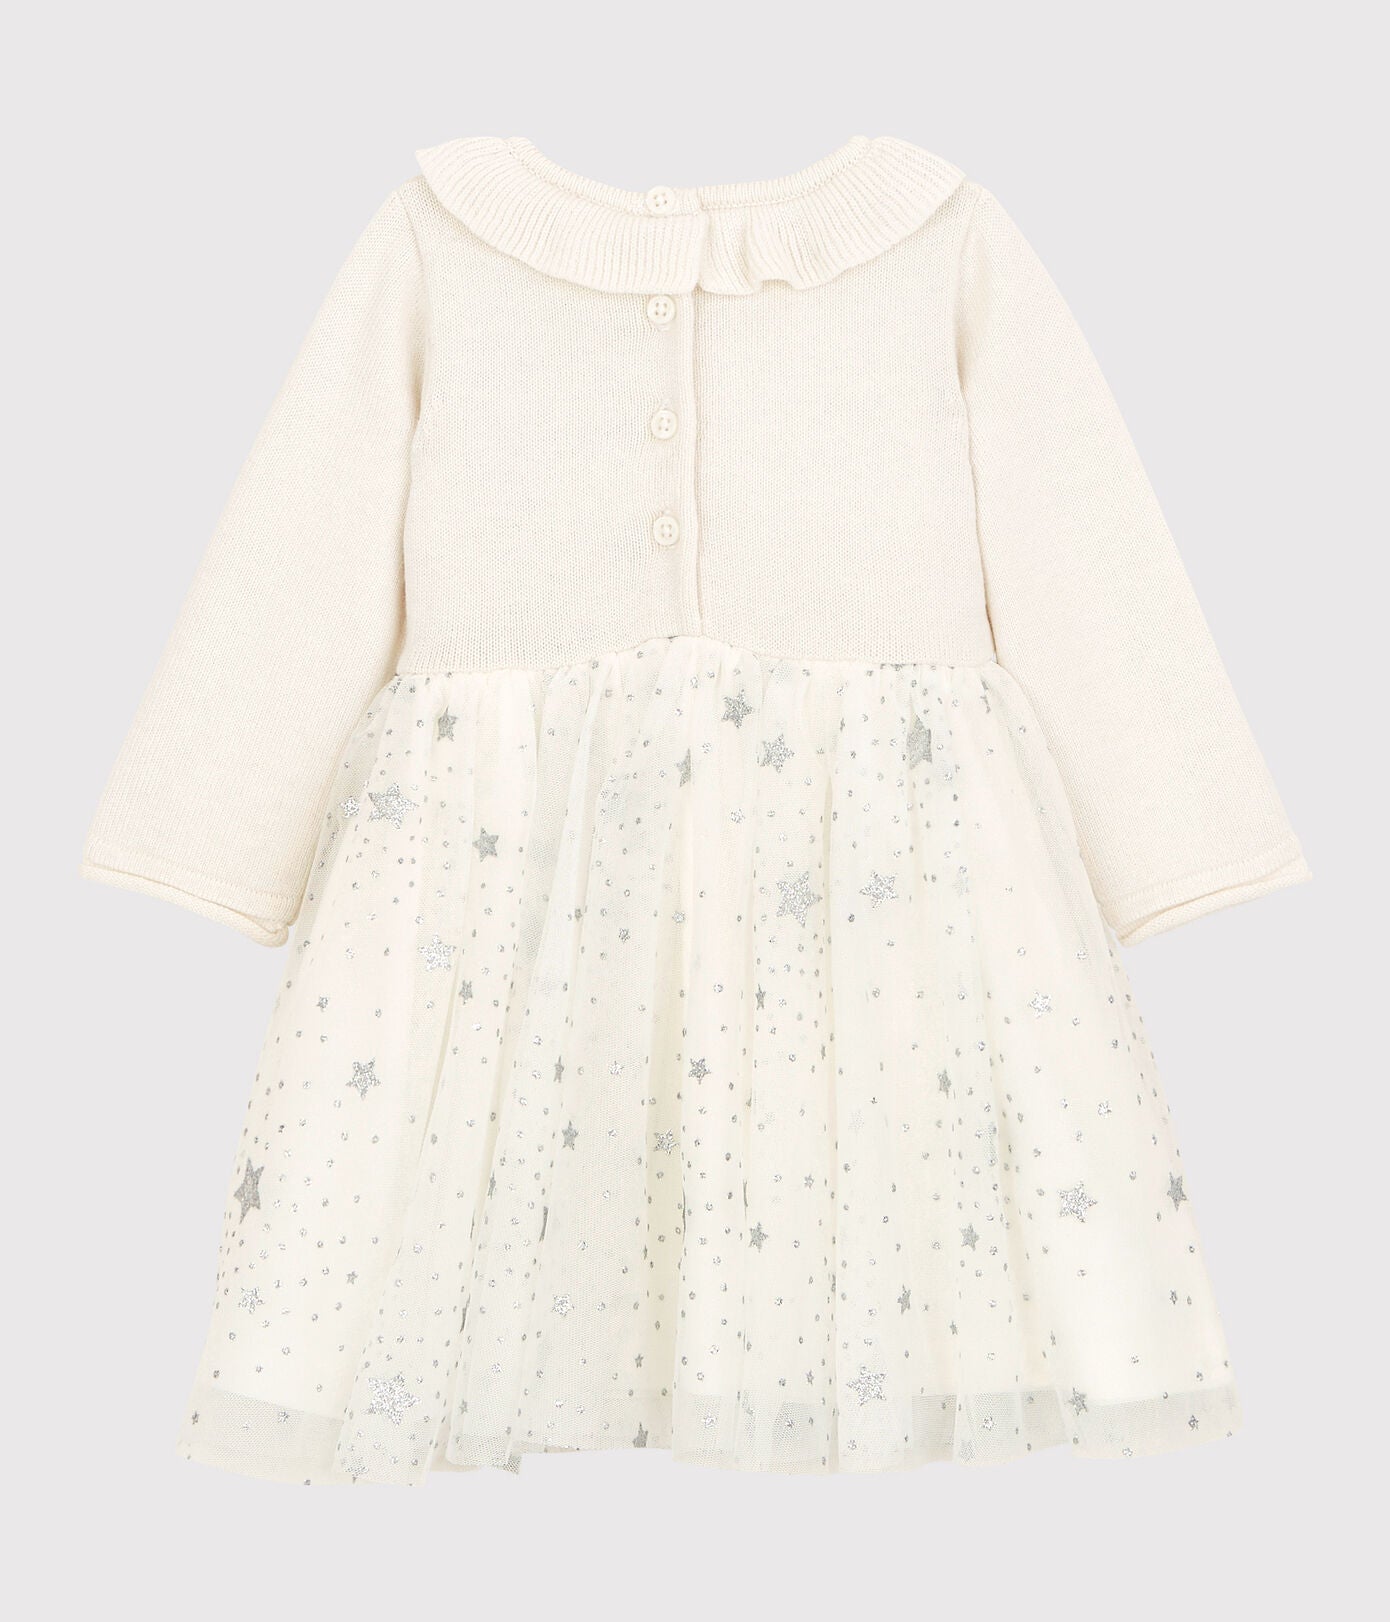 Baby Girls White Cotton Dress